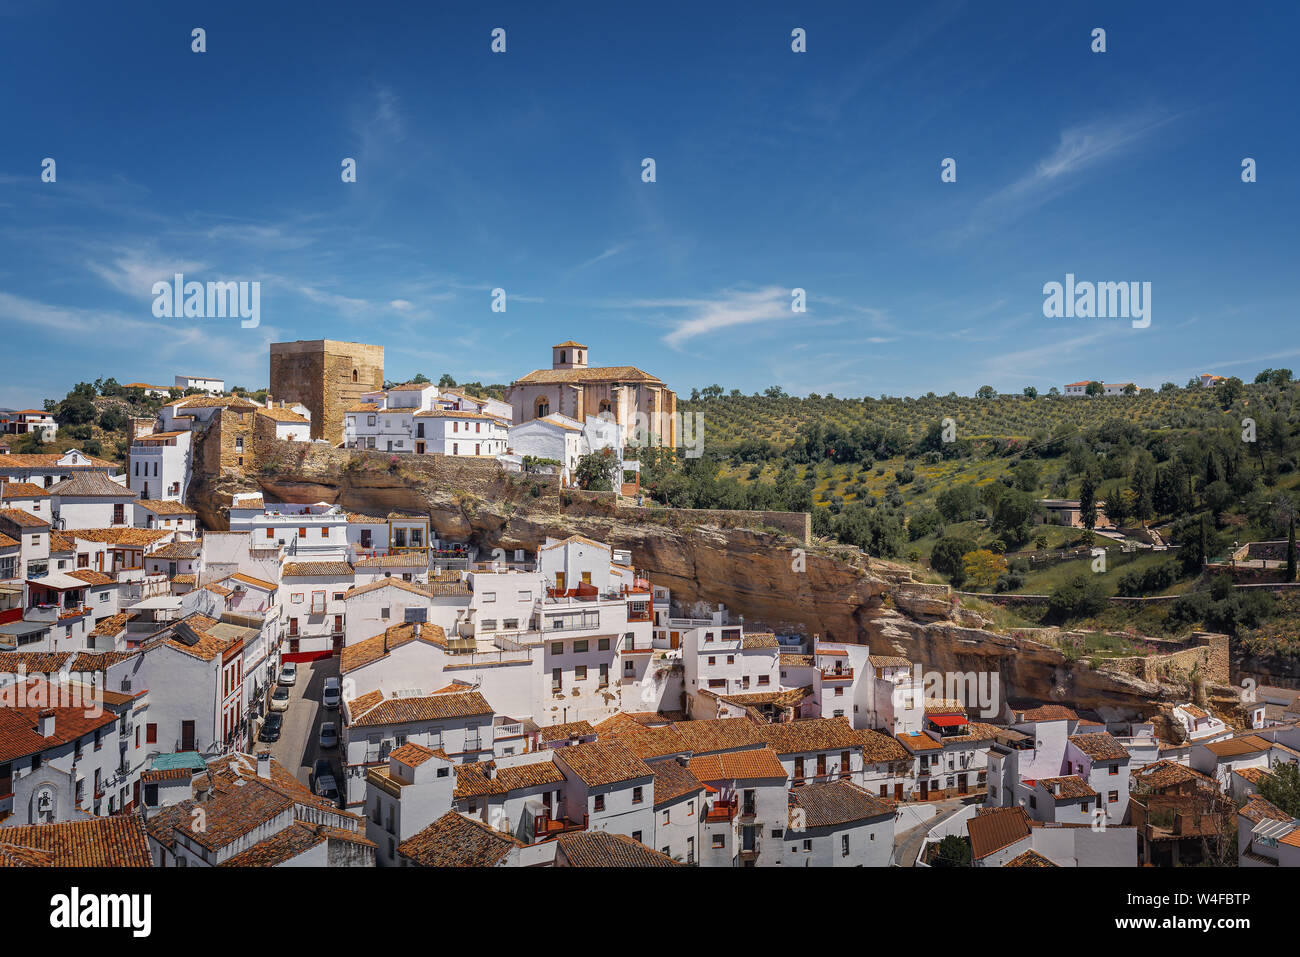 Aerial view of Setenil de las Bodegas - Setenil de las Bodegas, Cadiz Province, Andalusia, Spain Stock Photo